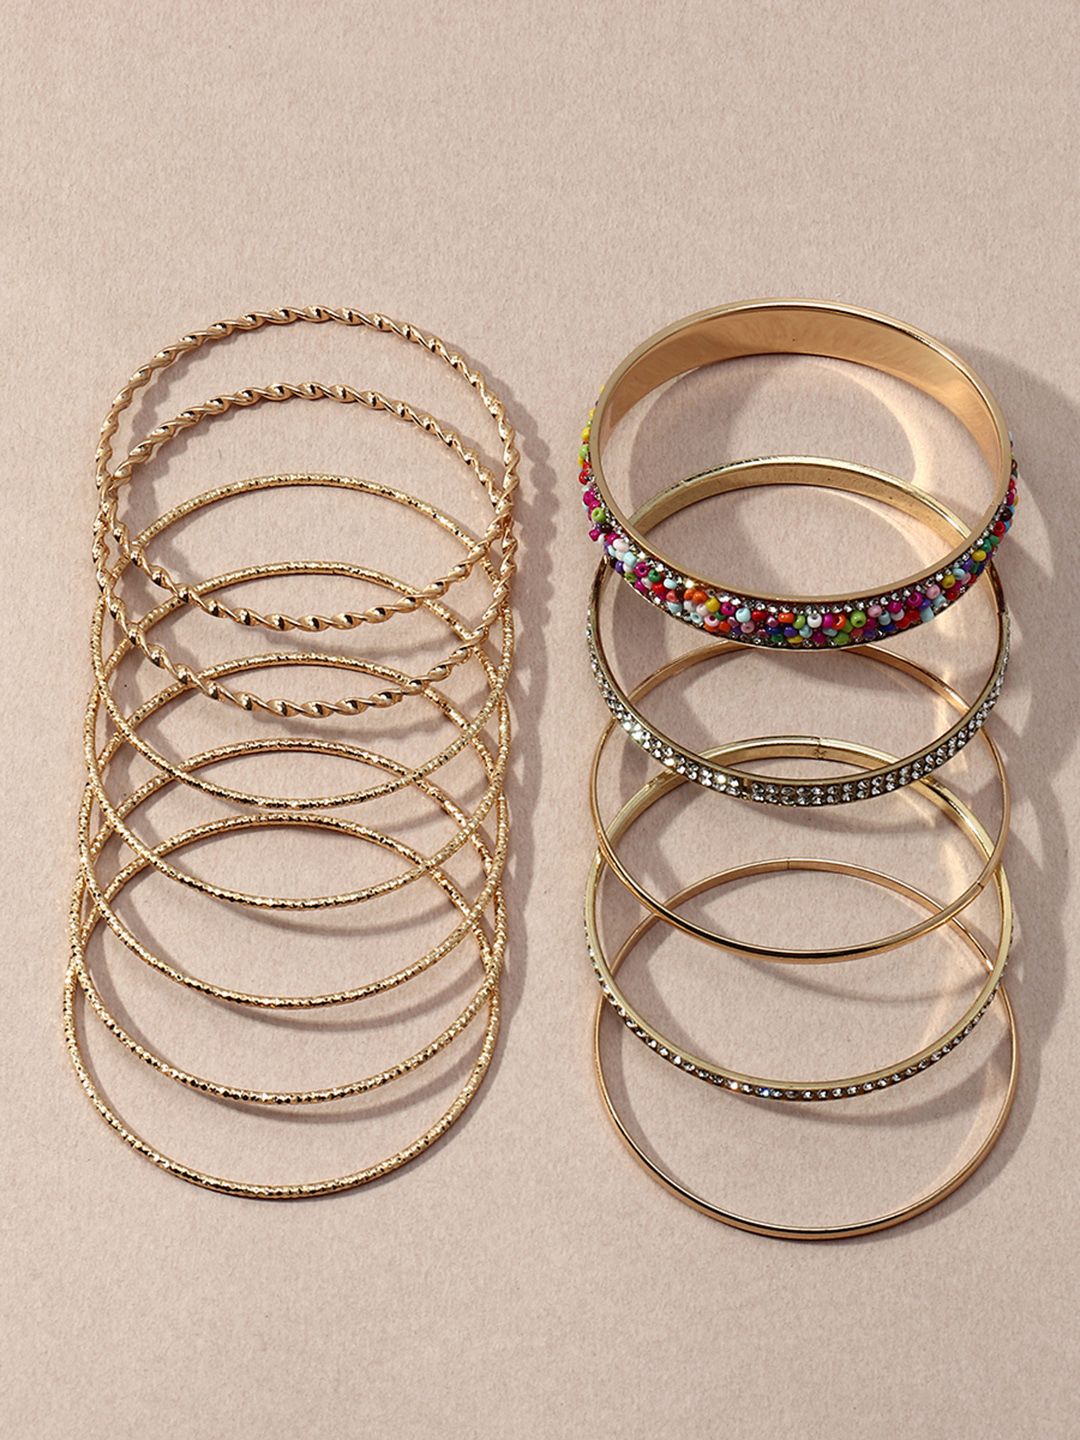 URBANIC Women Pack of 12 Gold-Toned Bangle-Style Bracelet Price in India